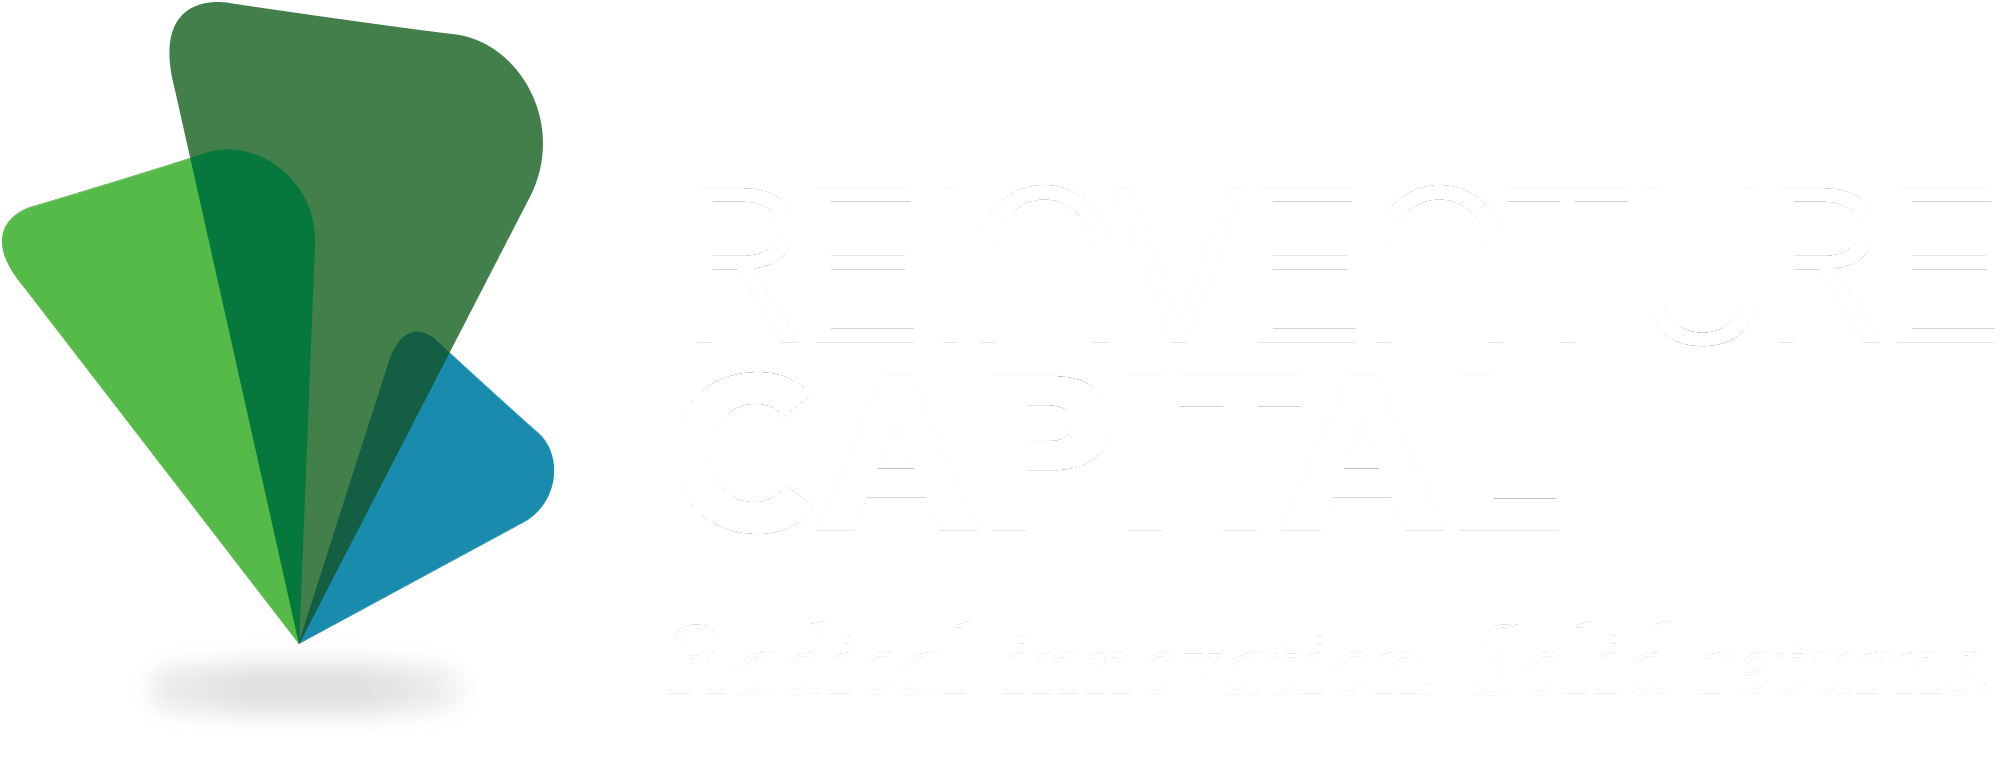 Reinventure Capital - Radical innovation. Solid returns.